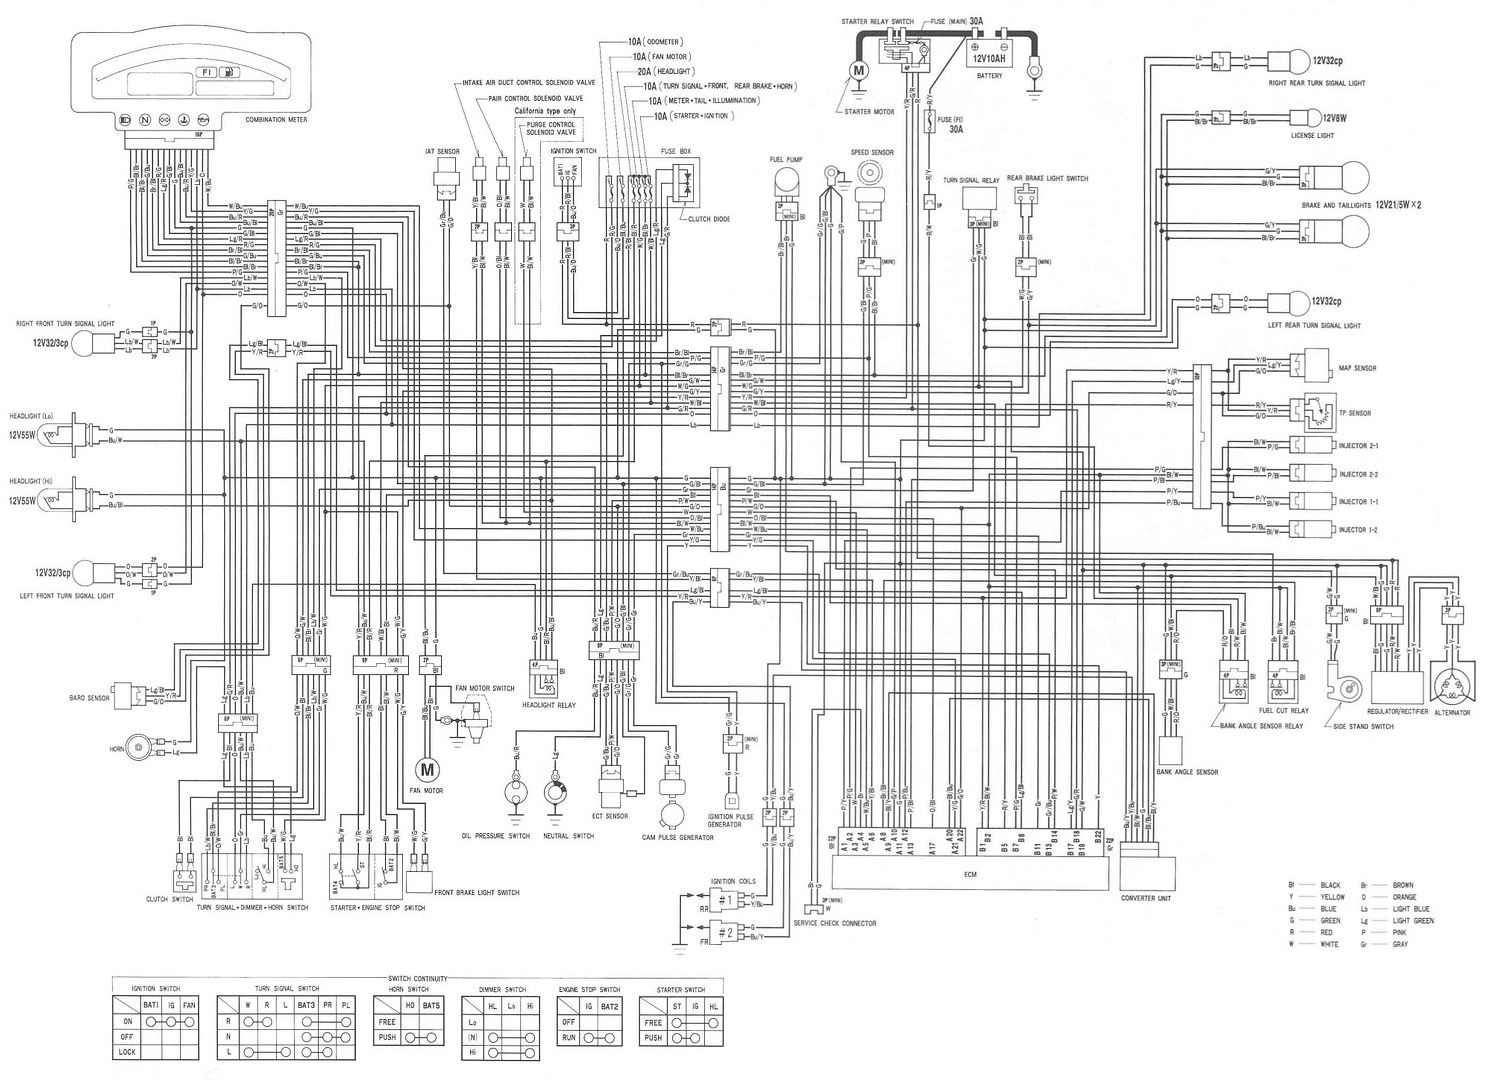 rc51_wiringdiagram.jpg